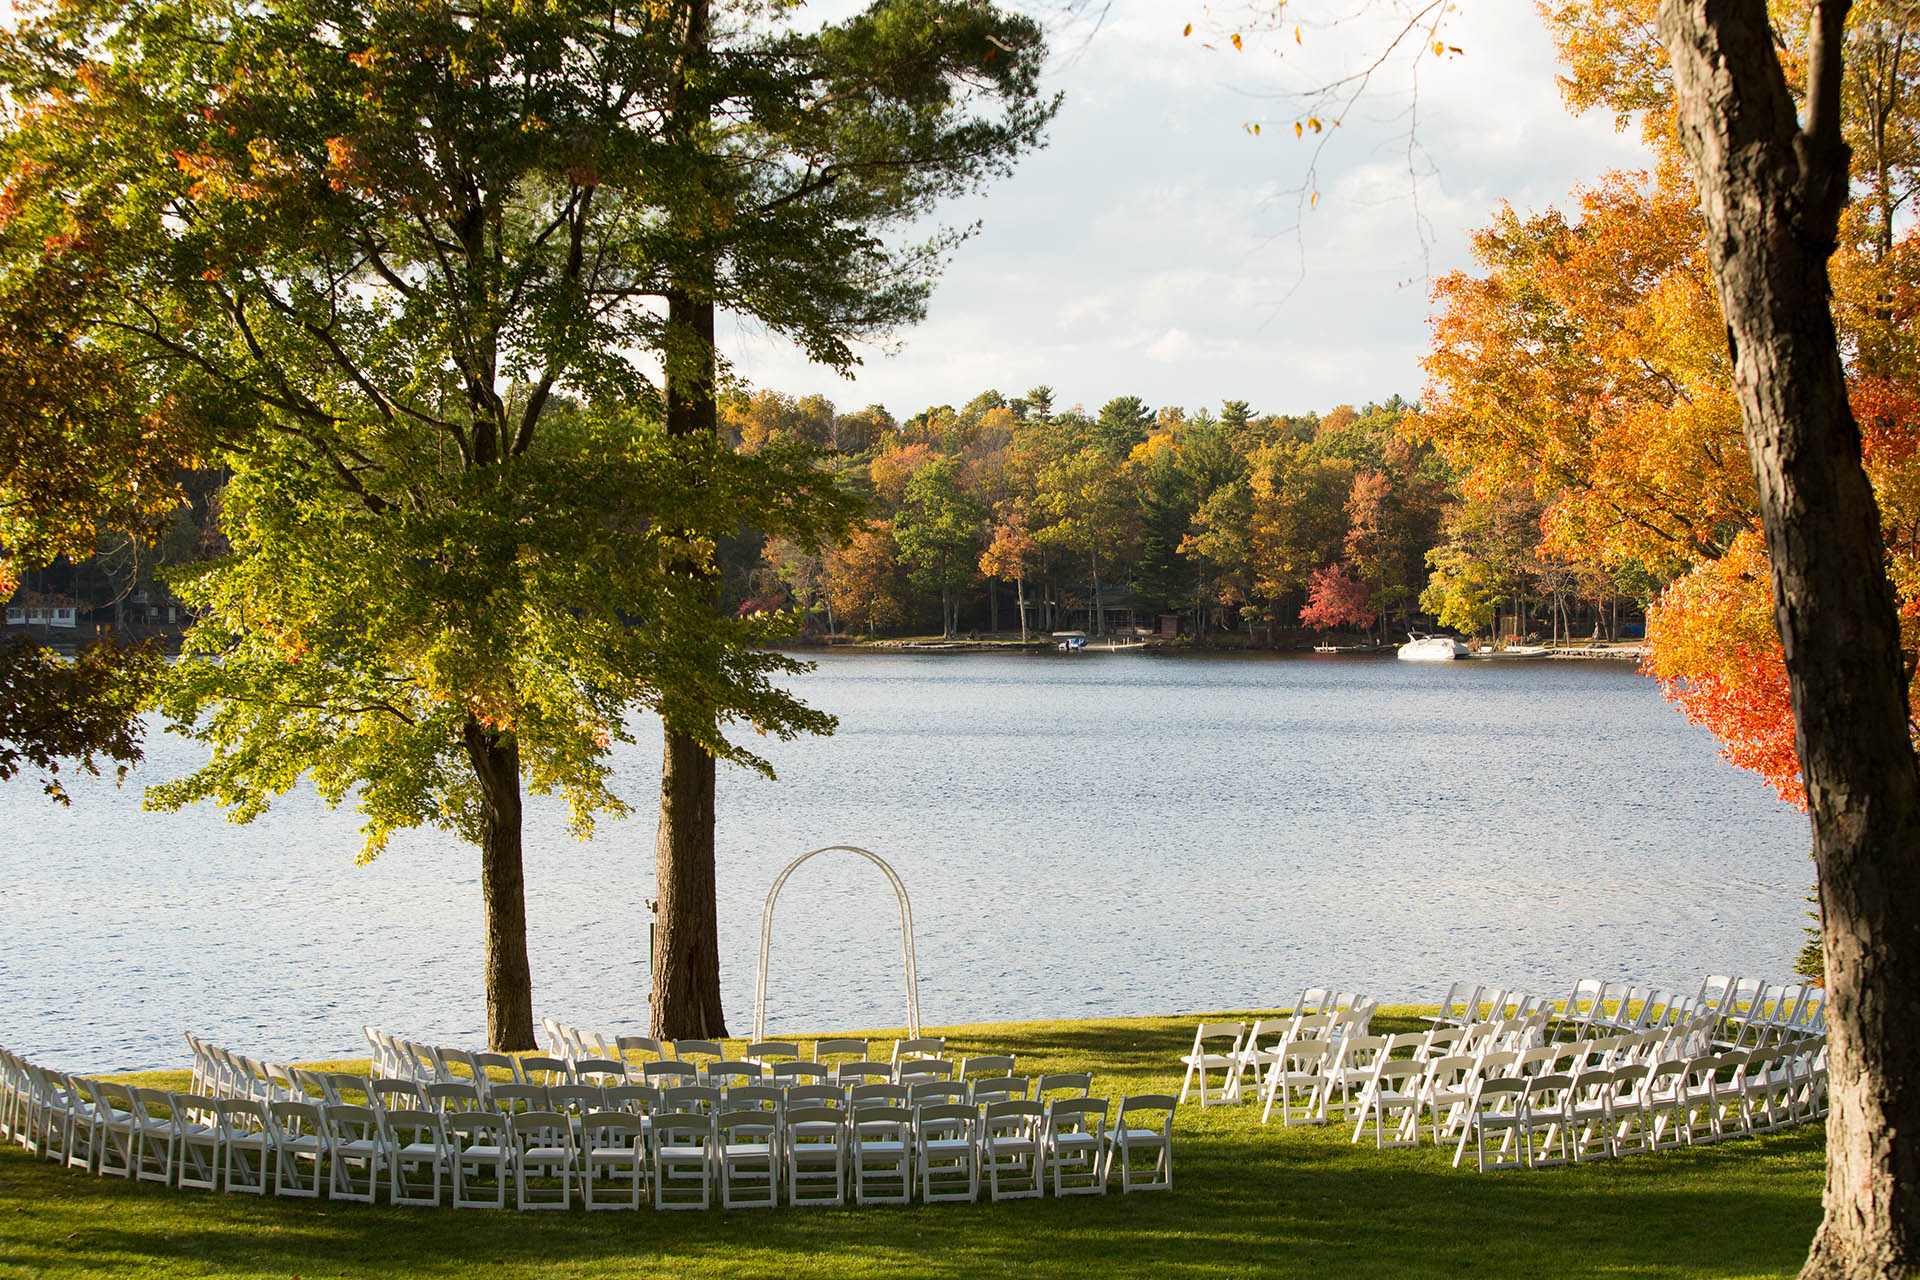 Lakeshore wedding ceremony setup with circular seating setup.